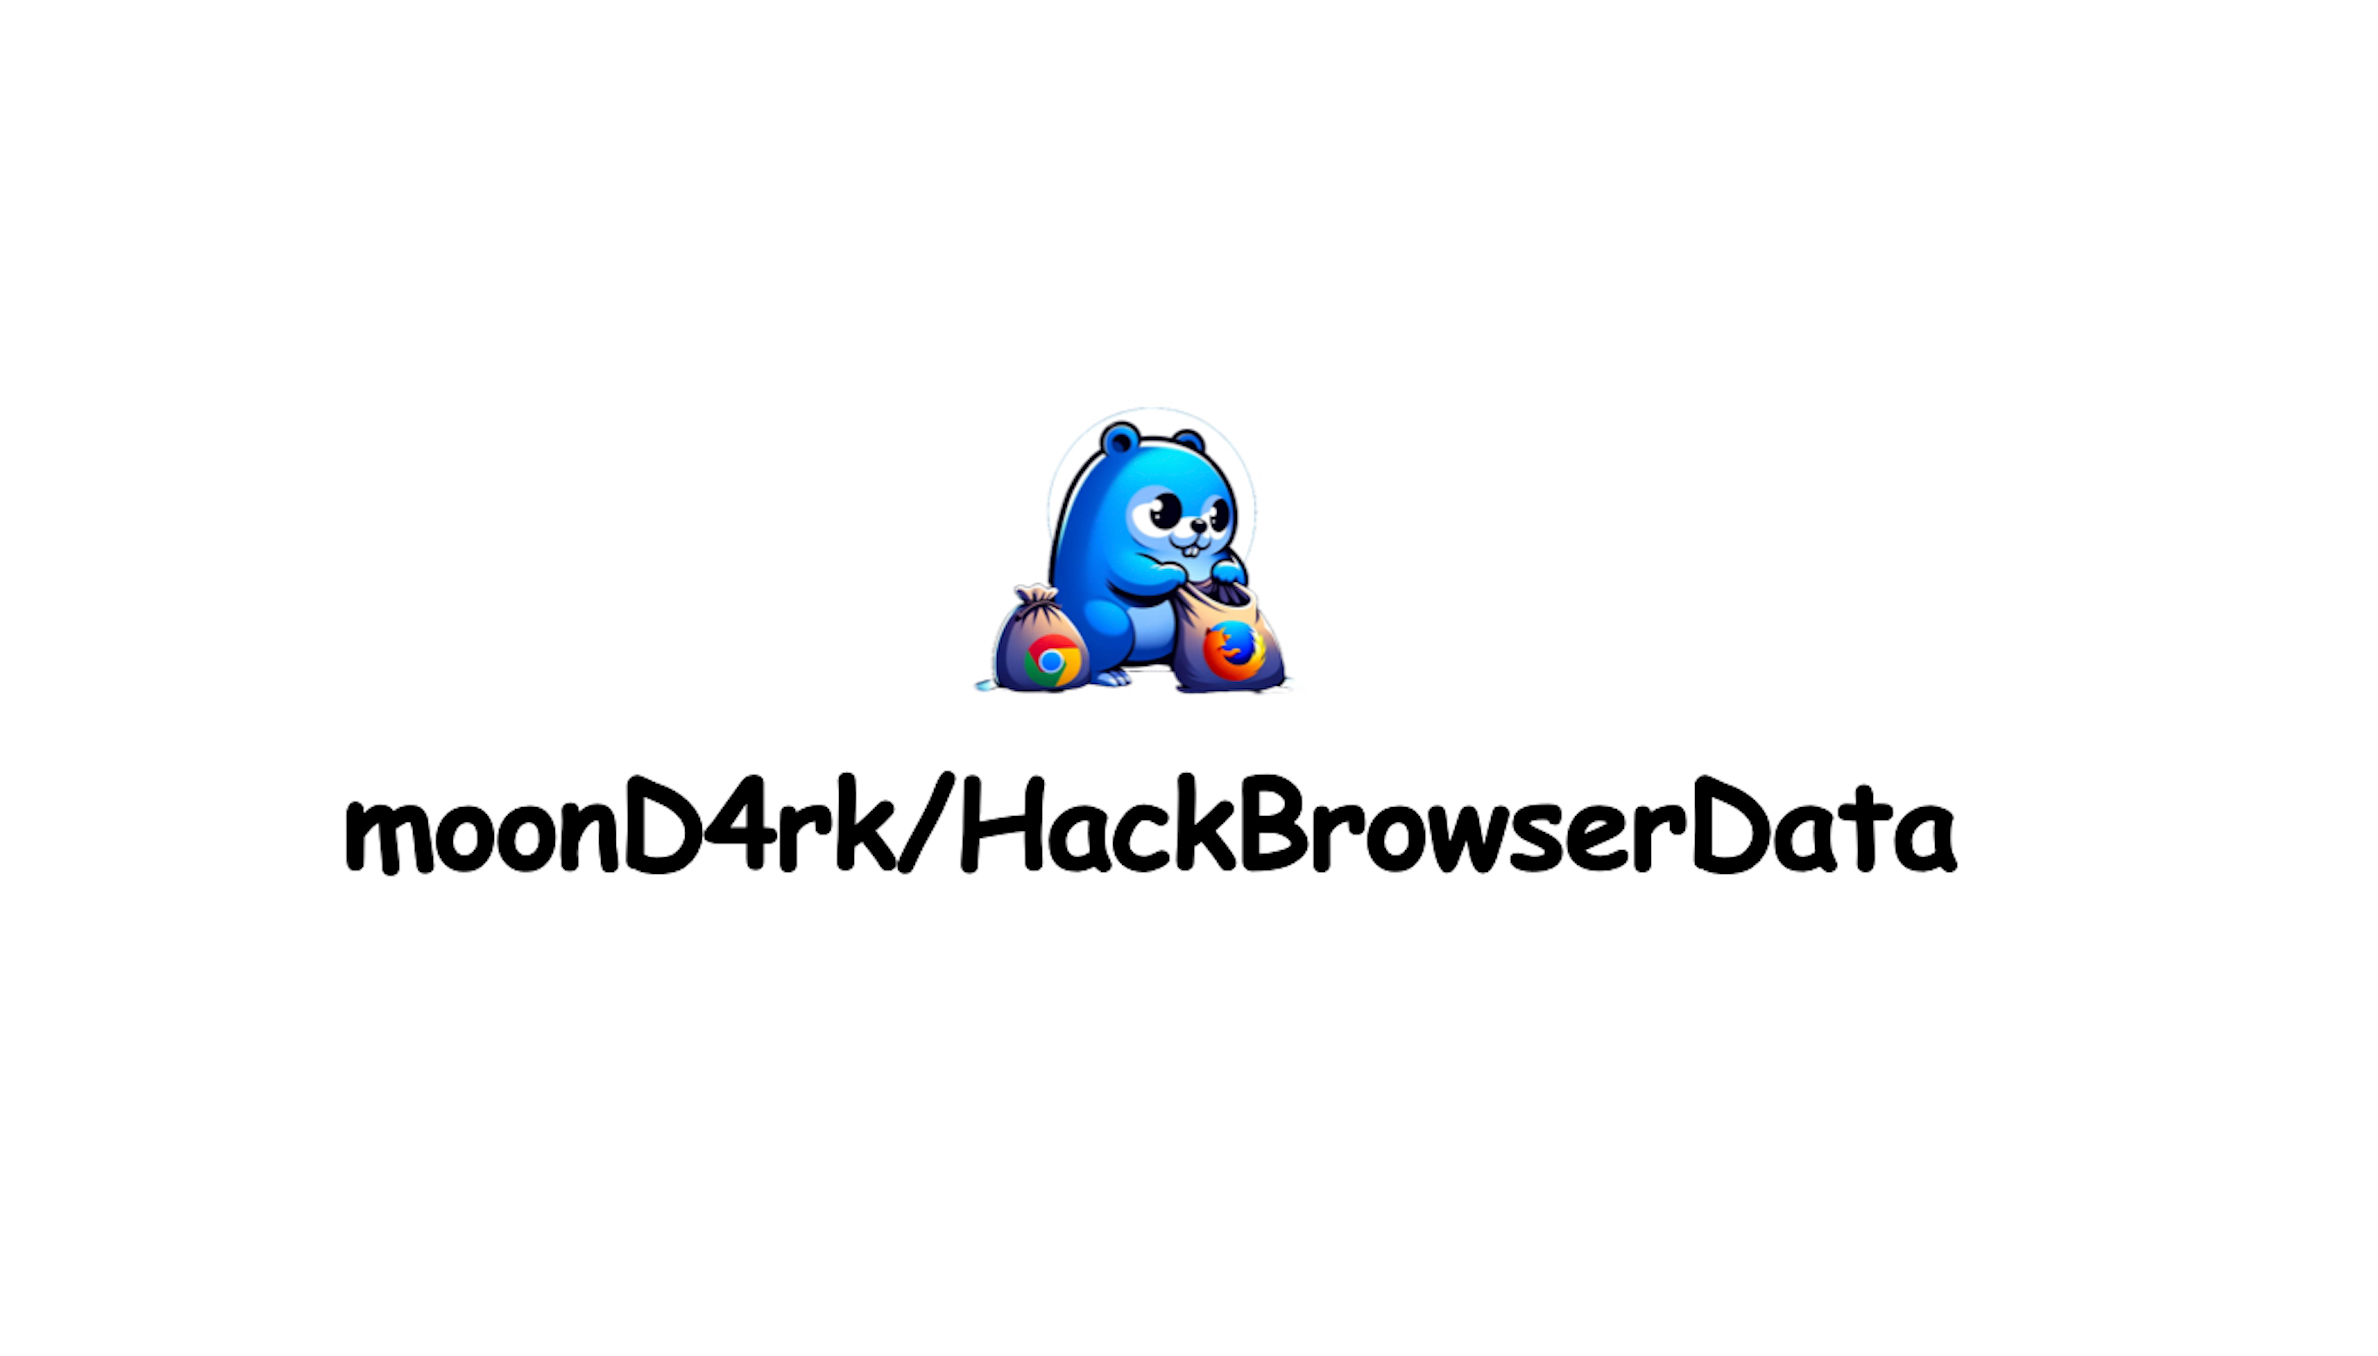 HackBrowserData